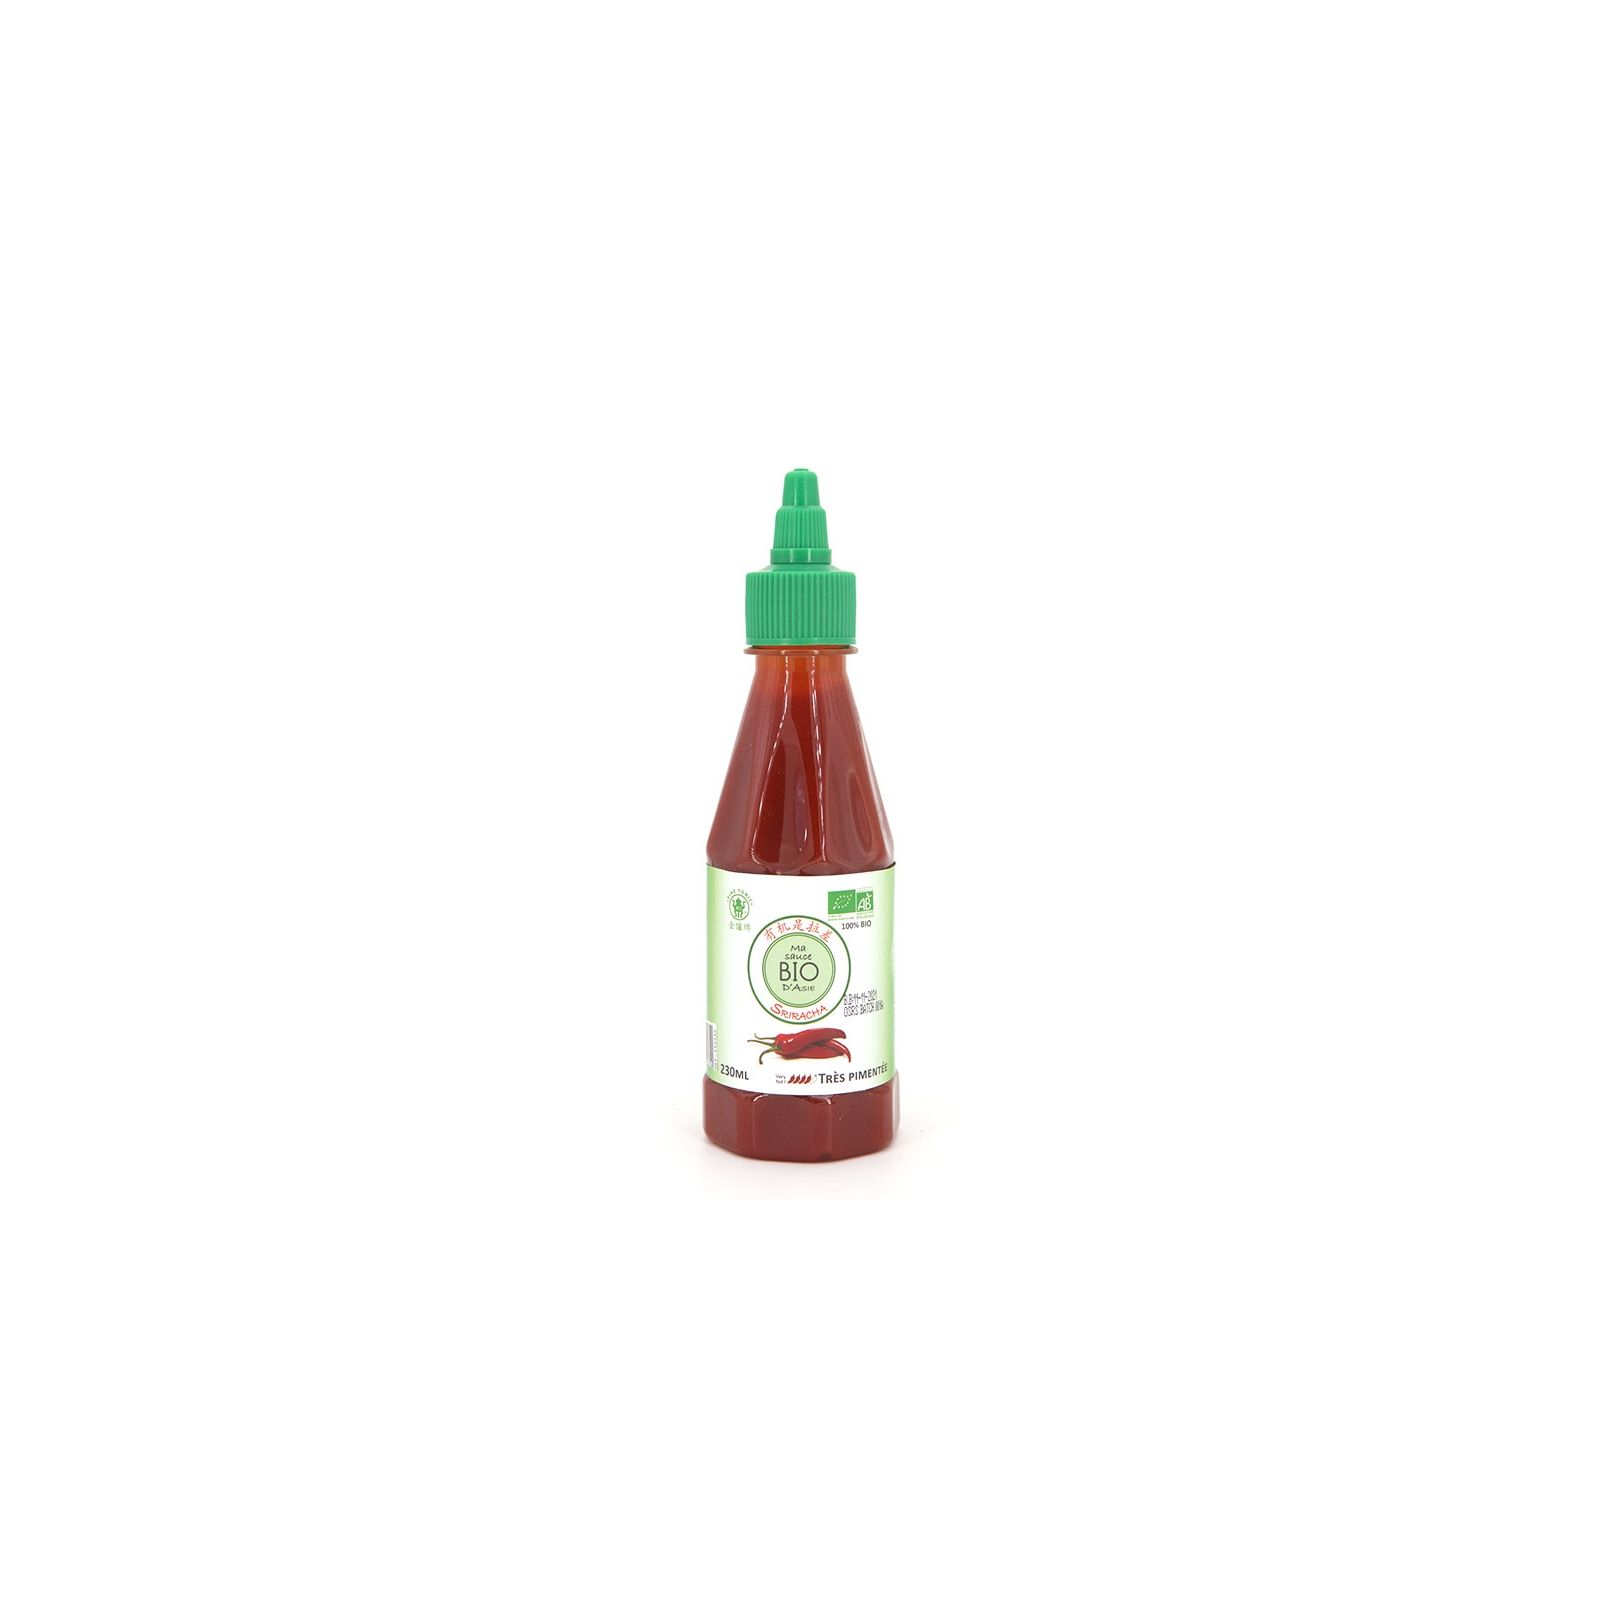 Asia Marché Sauce piments Sriracha BIO 230ml